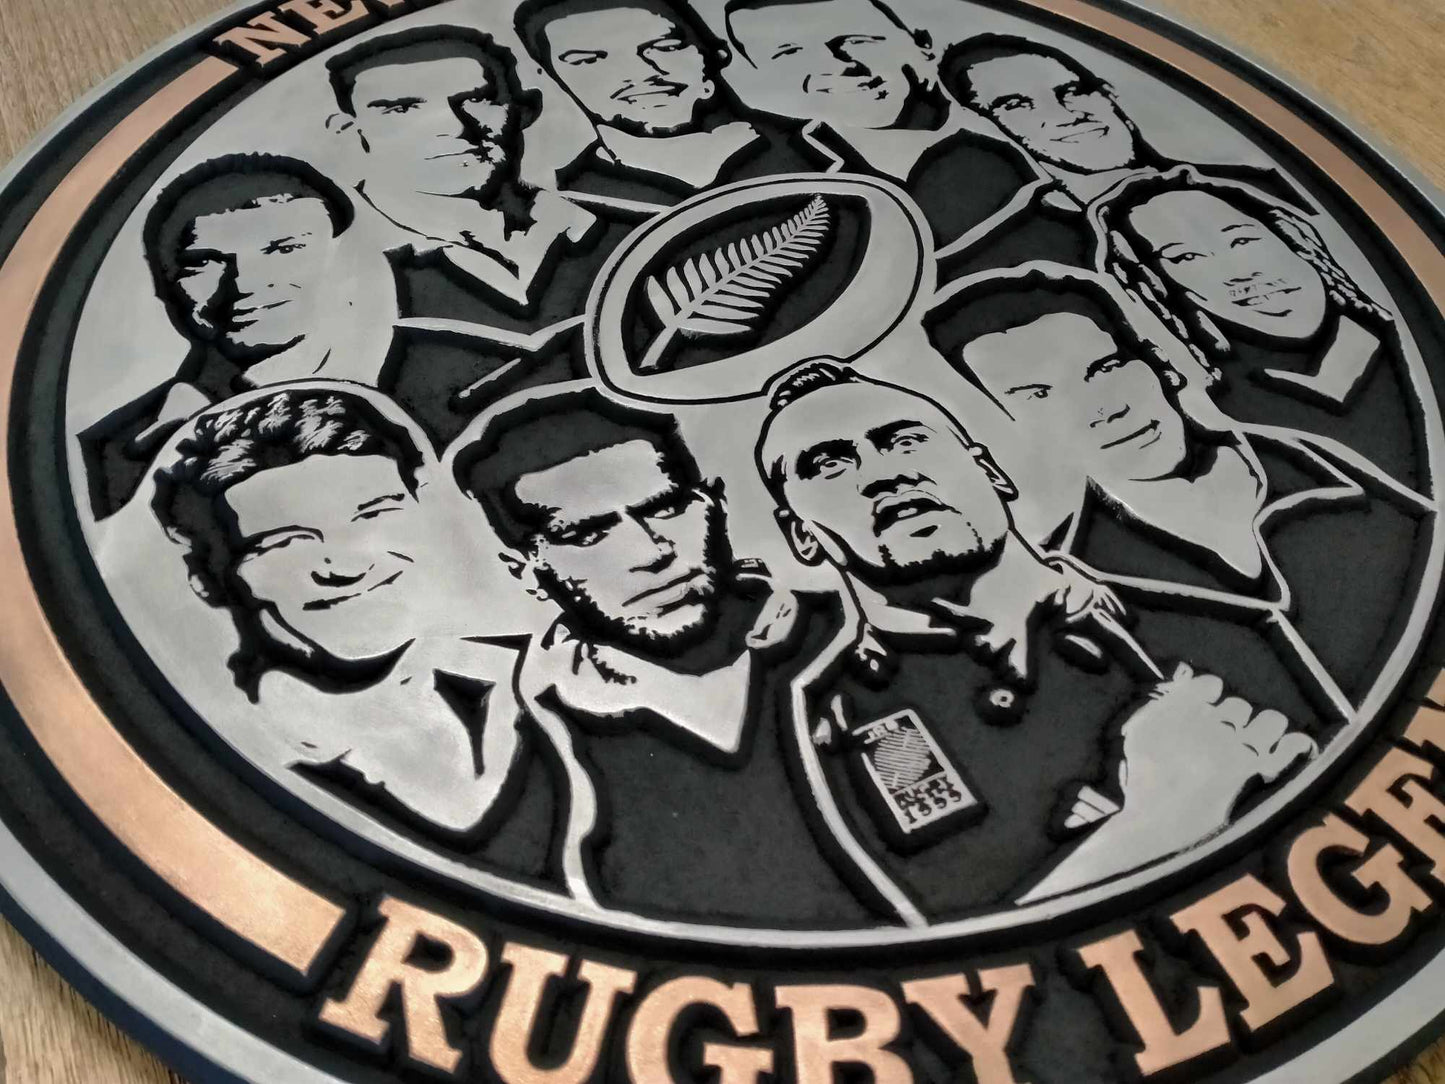 NZ Rugby Legends